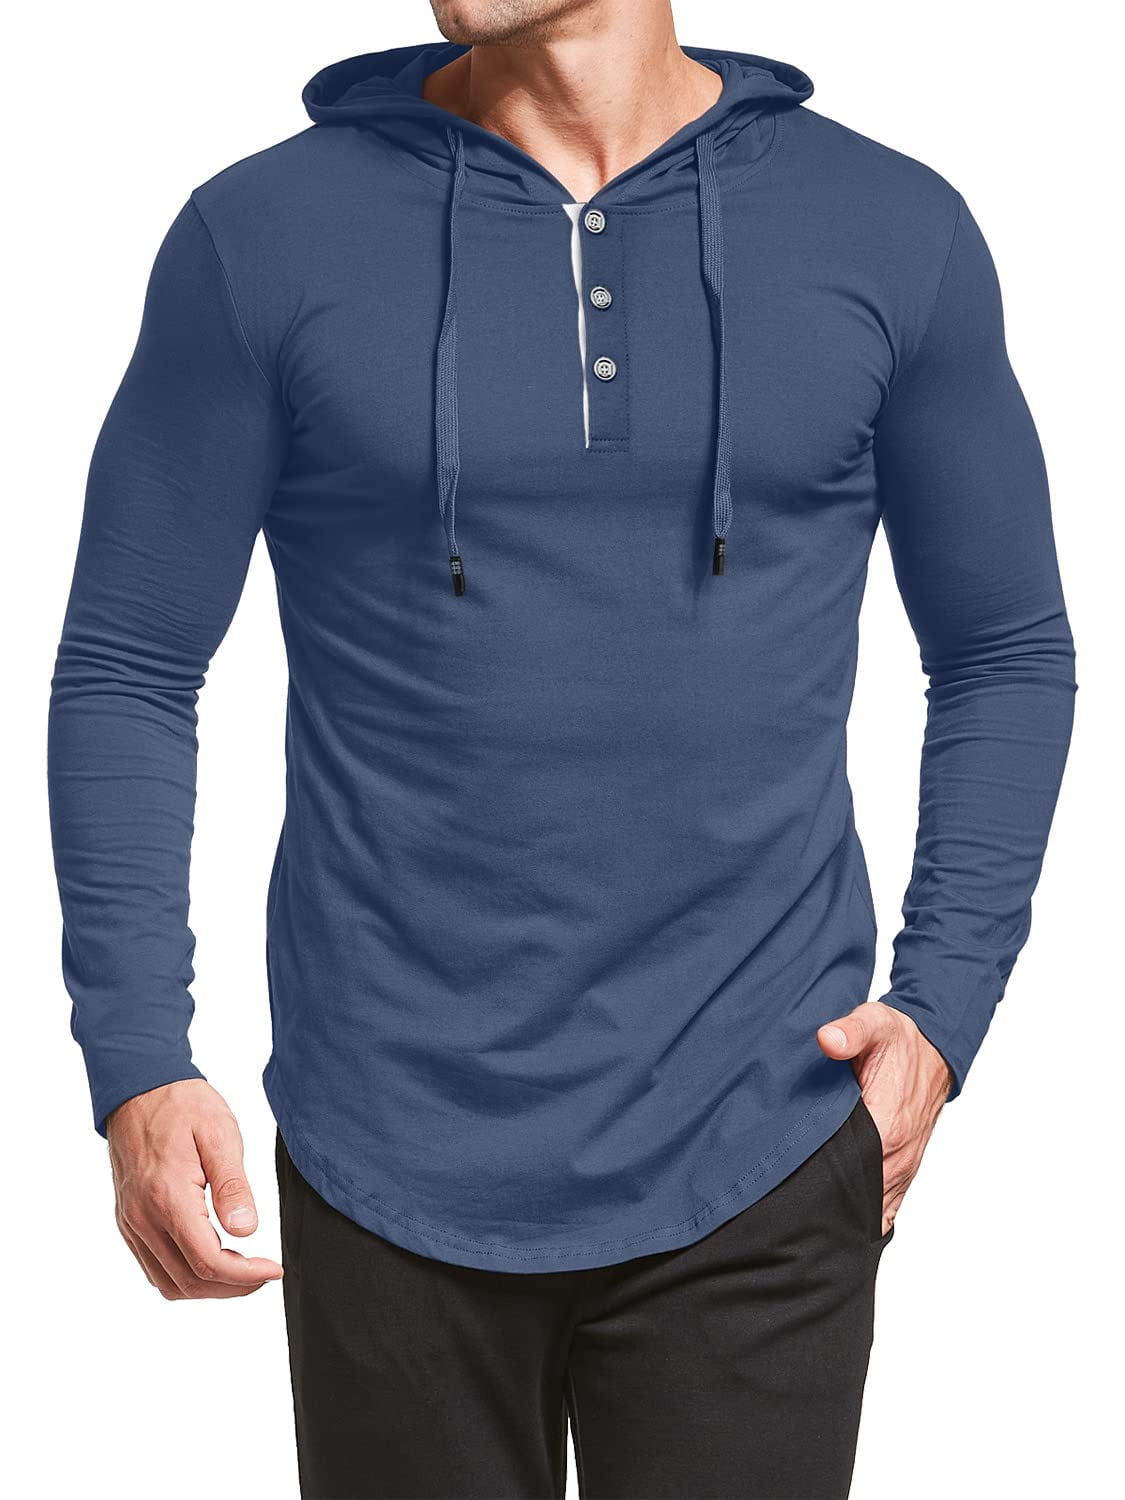 Aiyino Men's S-5X Short/Long Sleeve Fashion Athletic Hoodies Sport Sweatshirt Hip Hop Pullover 